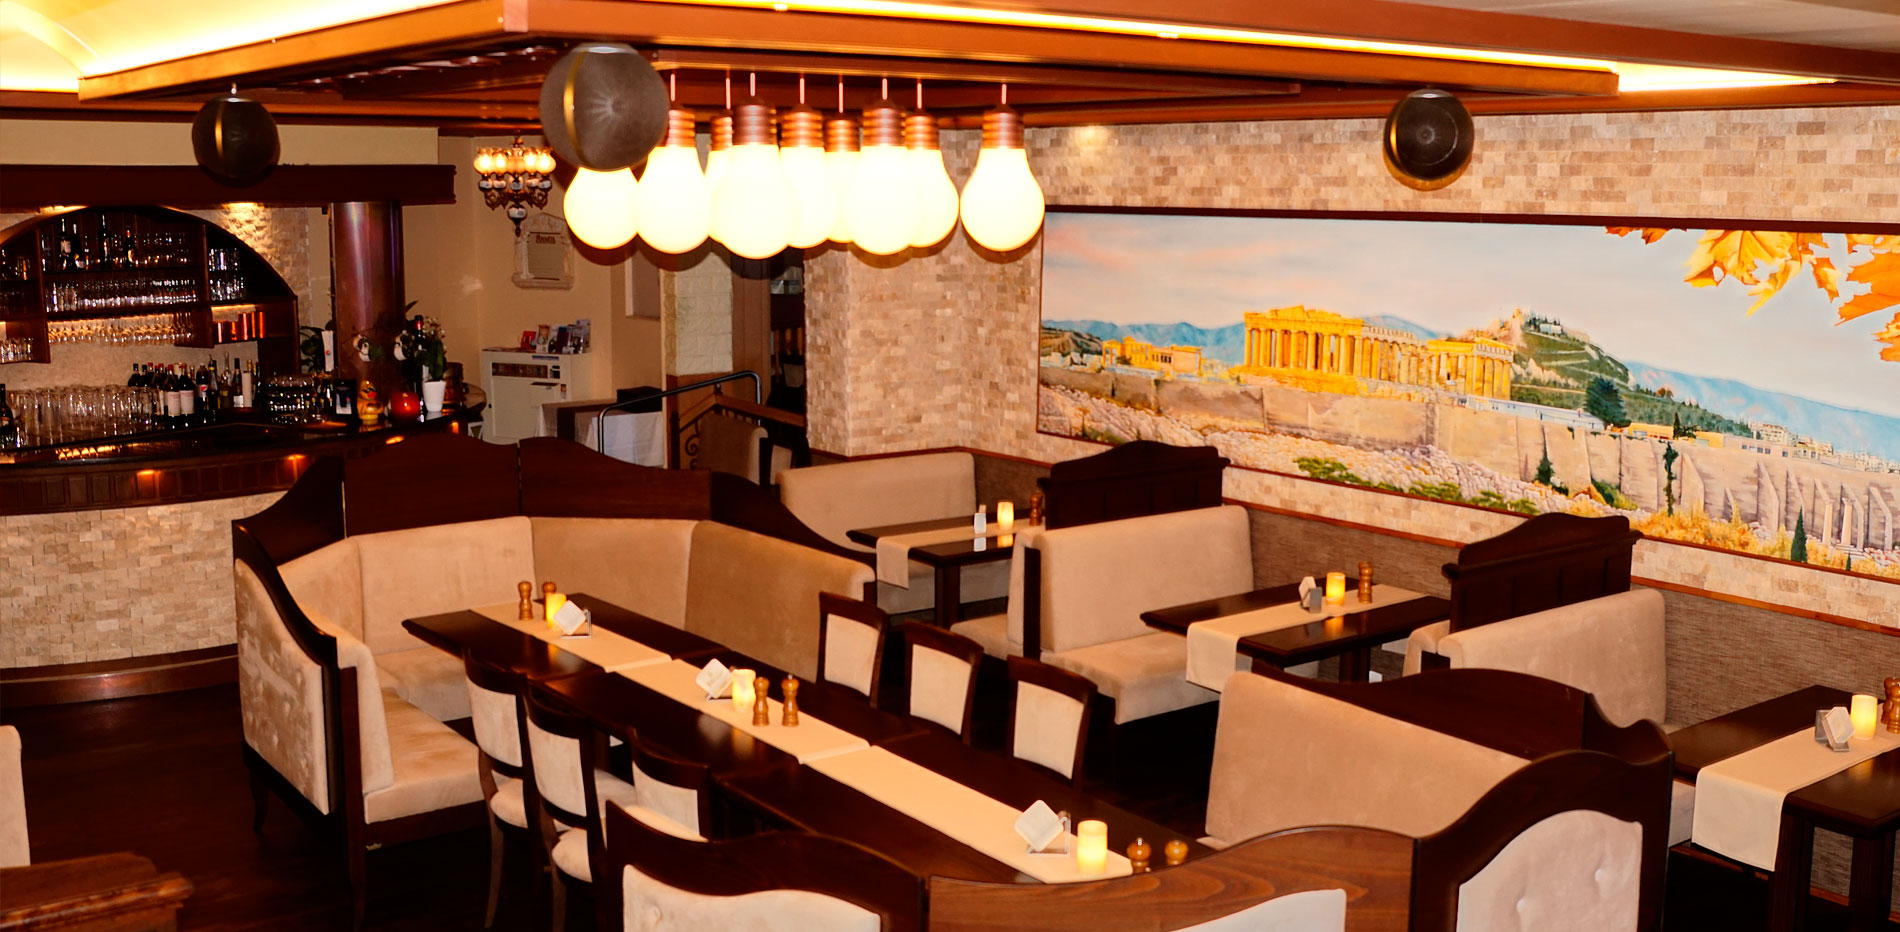 Foto 8 – Unser Restaurant Poseidon in Cuxhaven